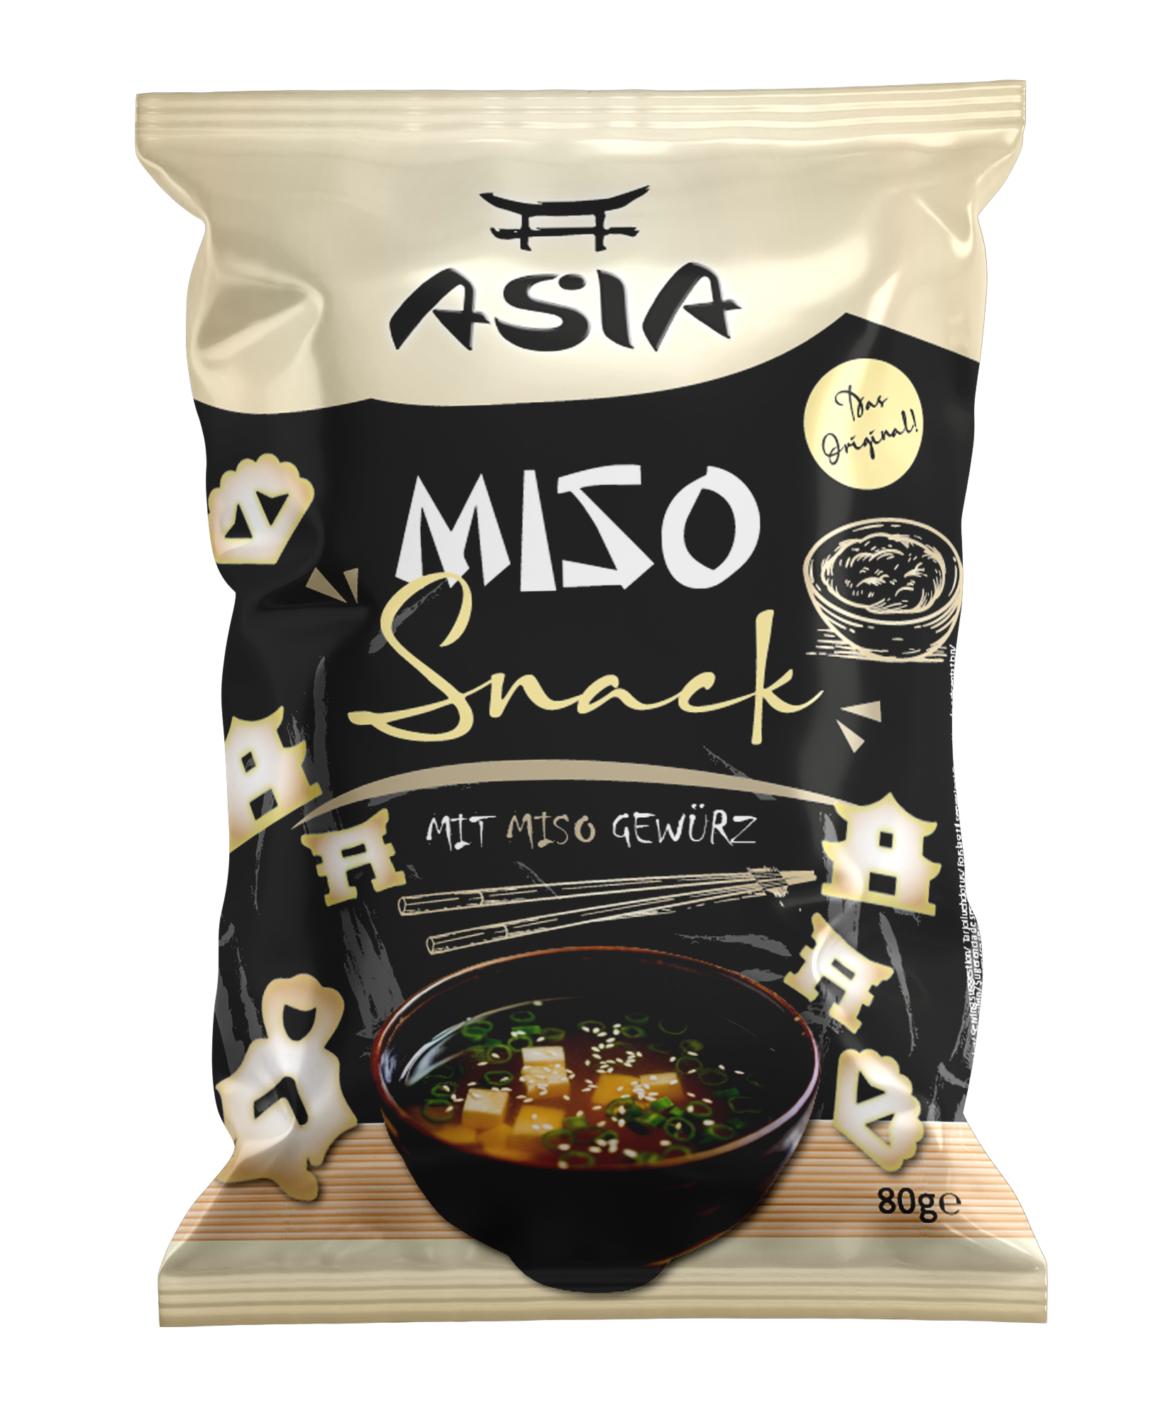 XOX Asia Miso Snack